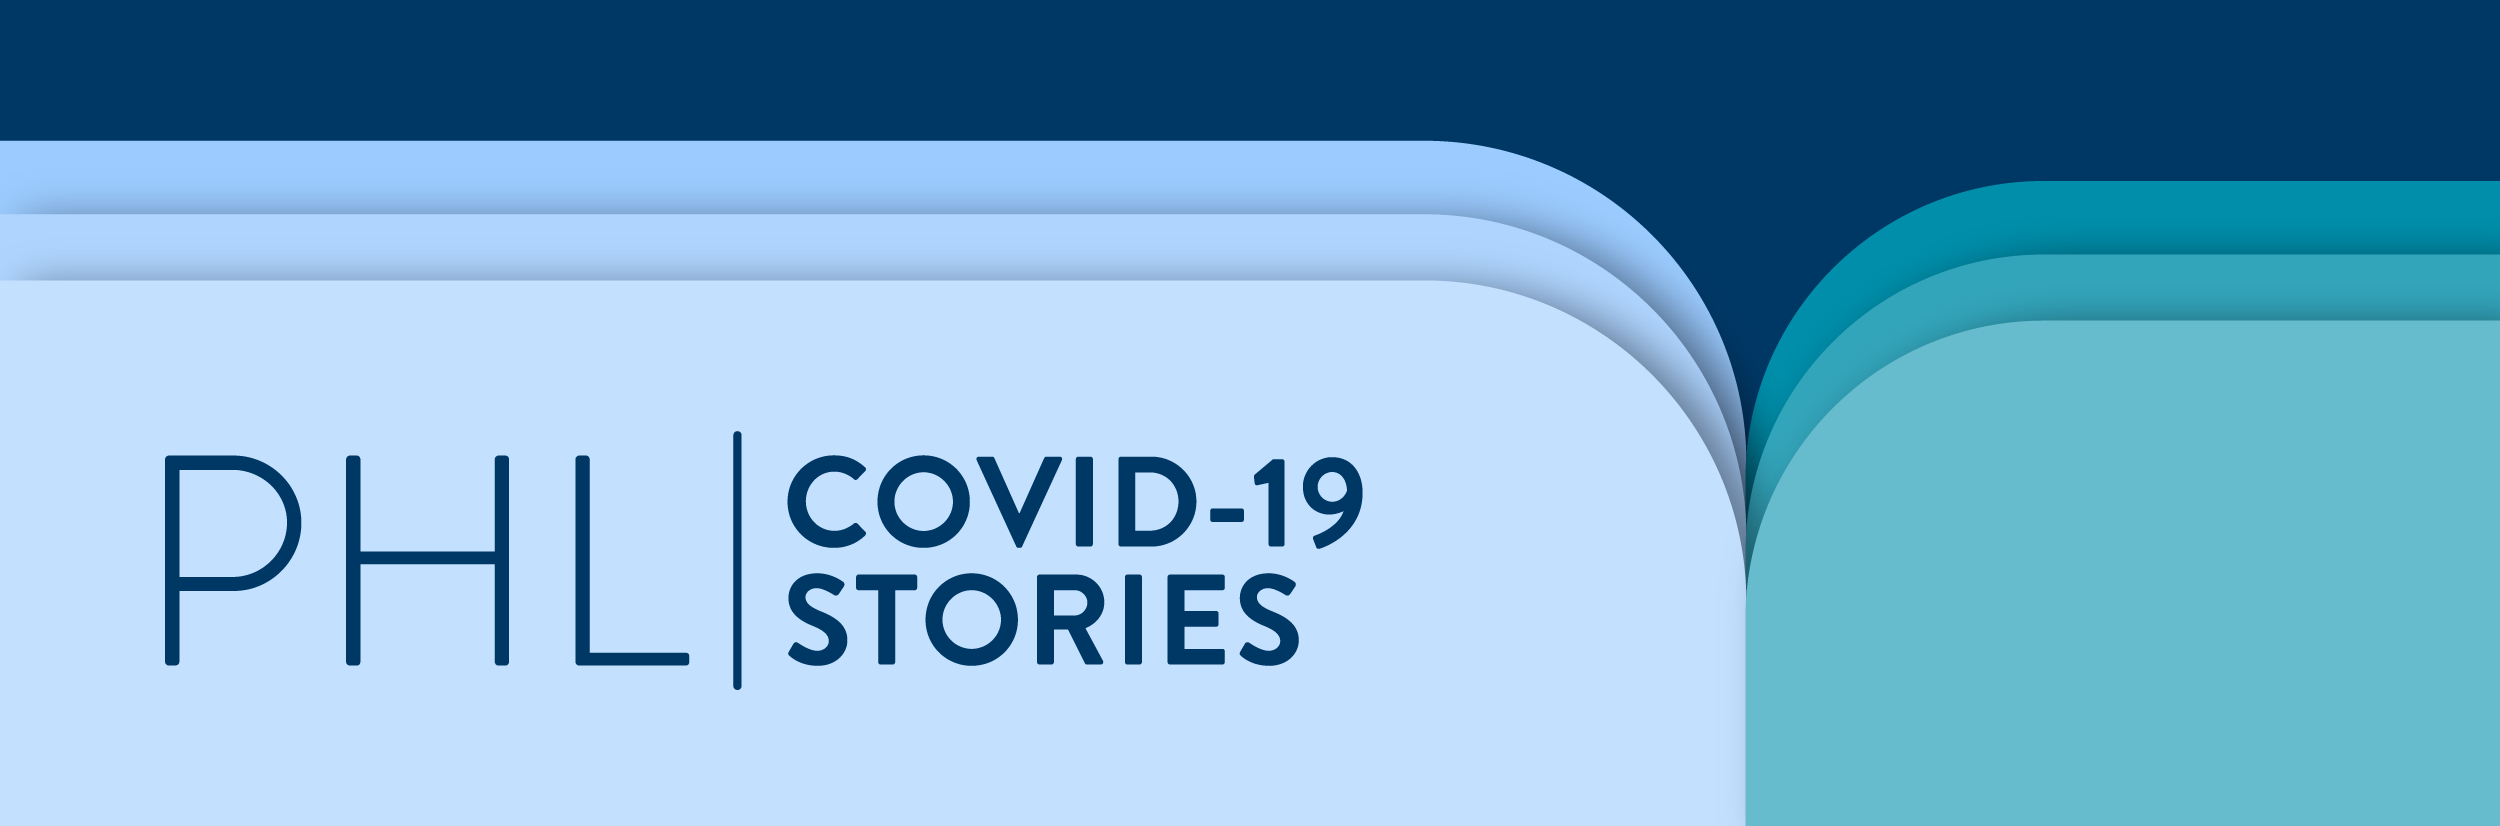 PHL COVID-19 Stories